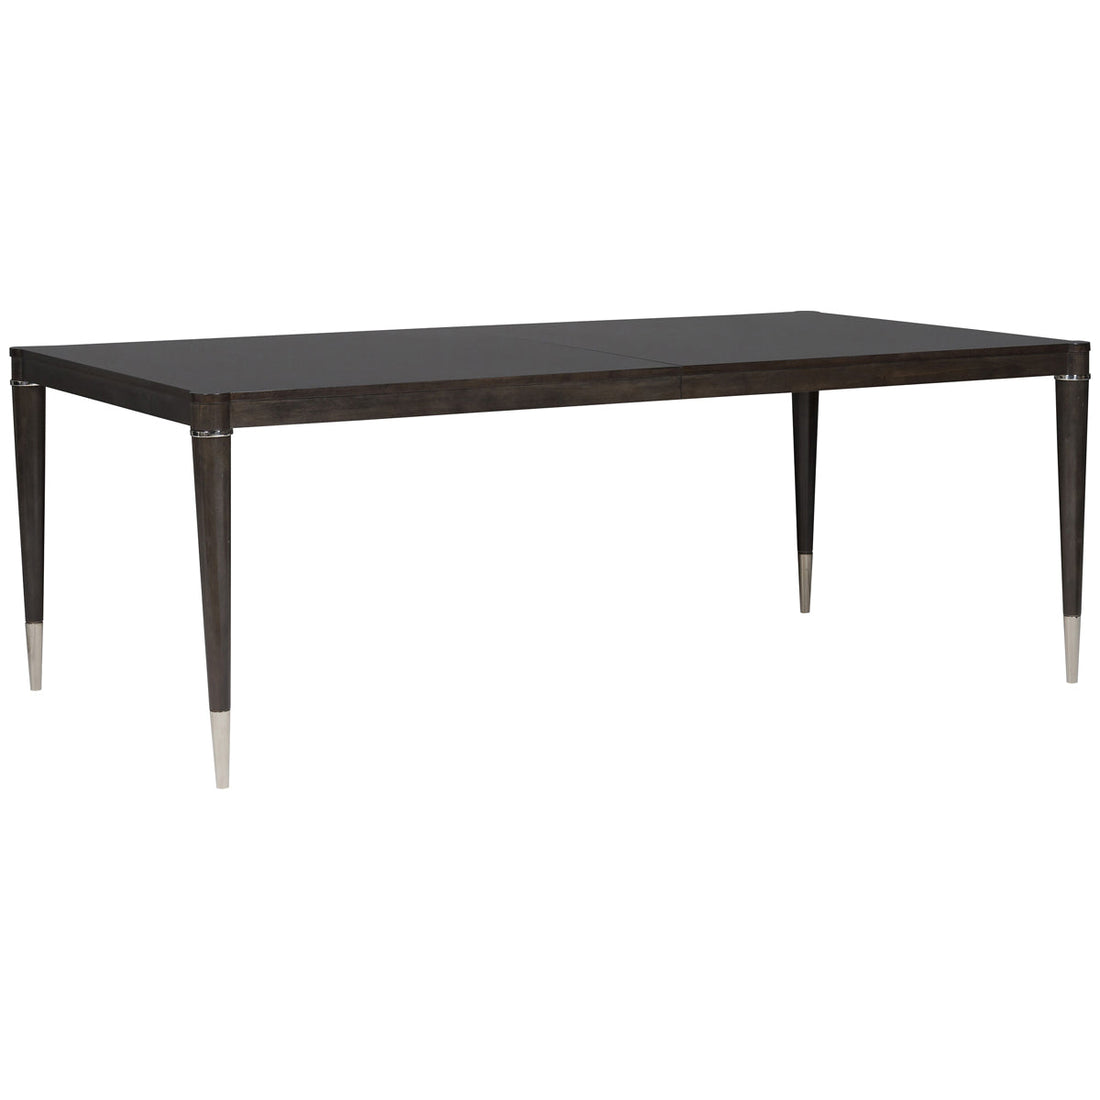 Vanguard Furniture Lillet Rectangular Dining Table